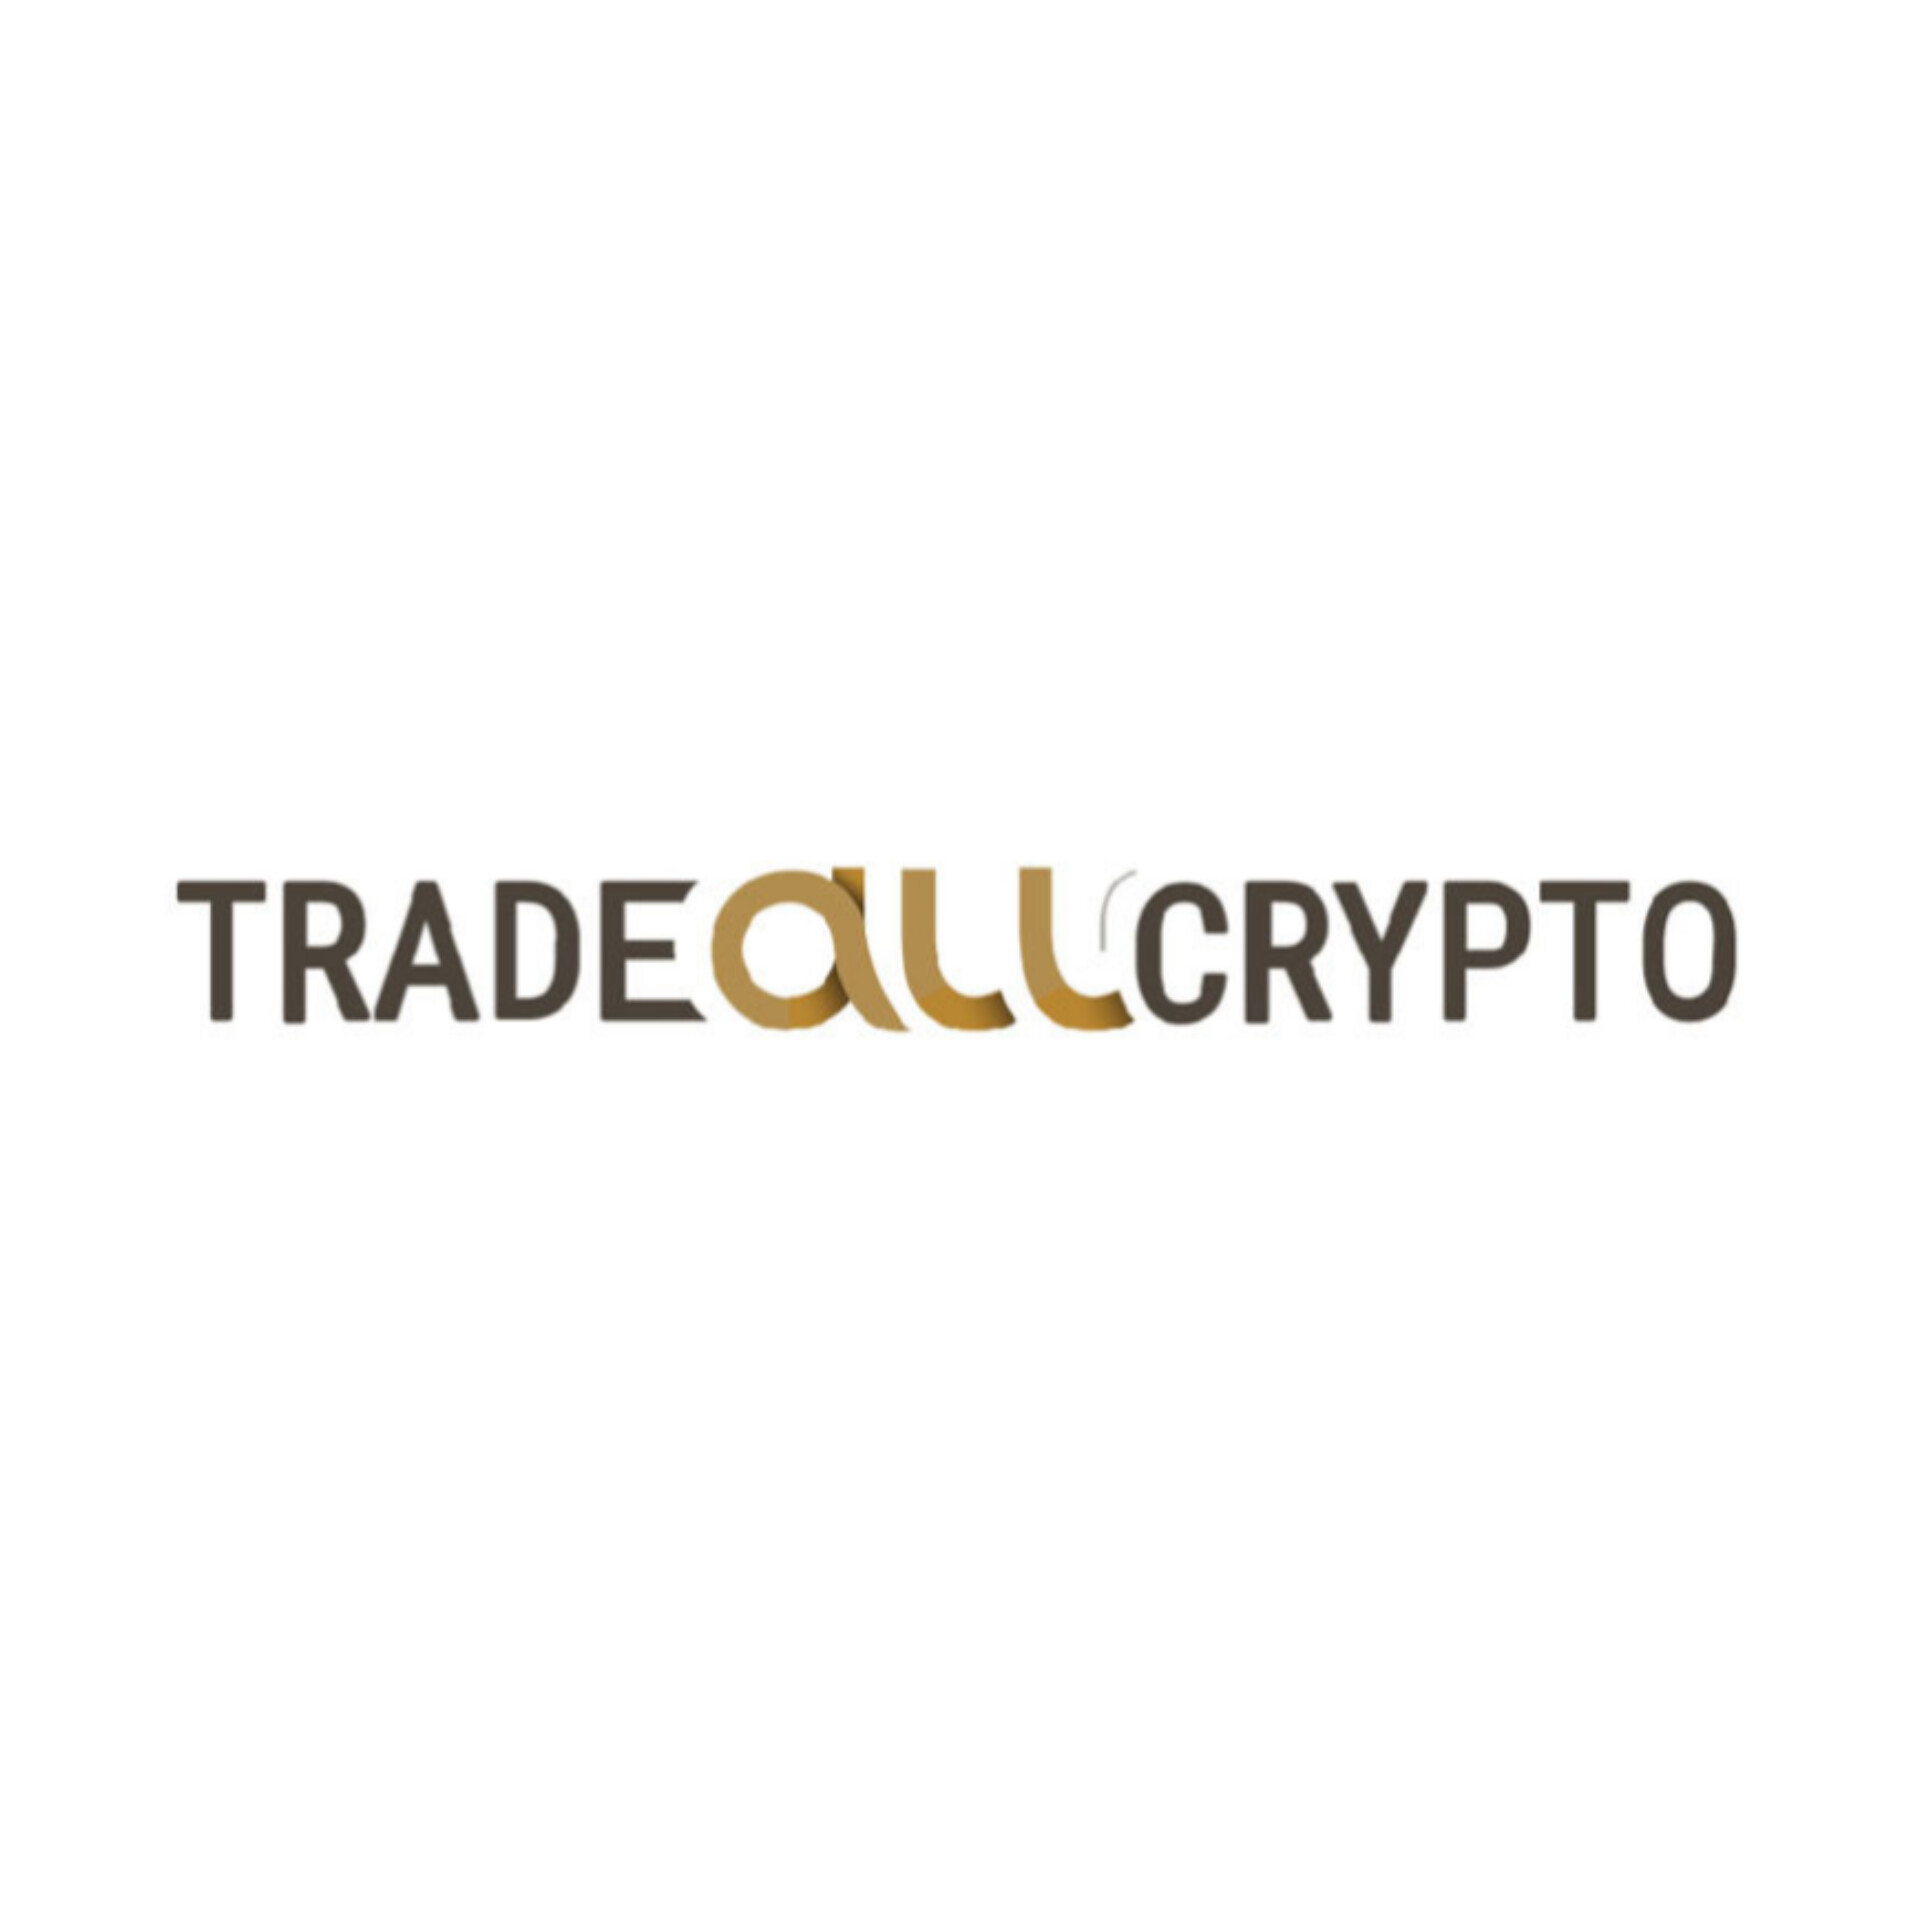 Tradeallcrypto